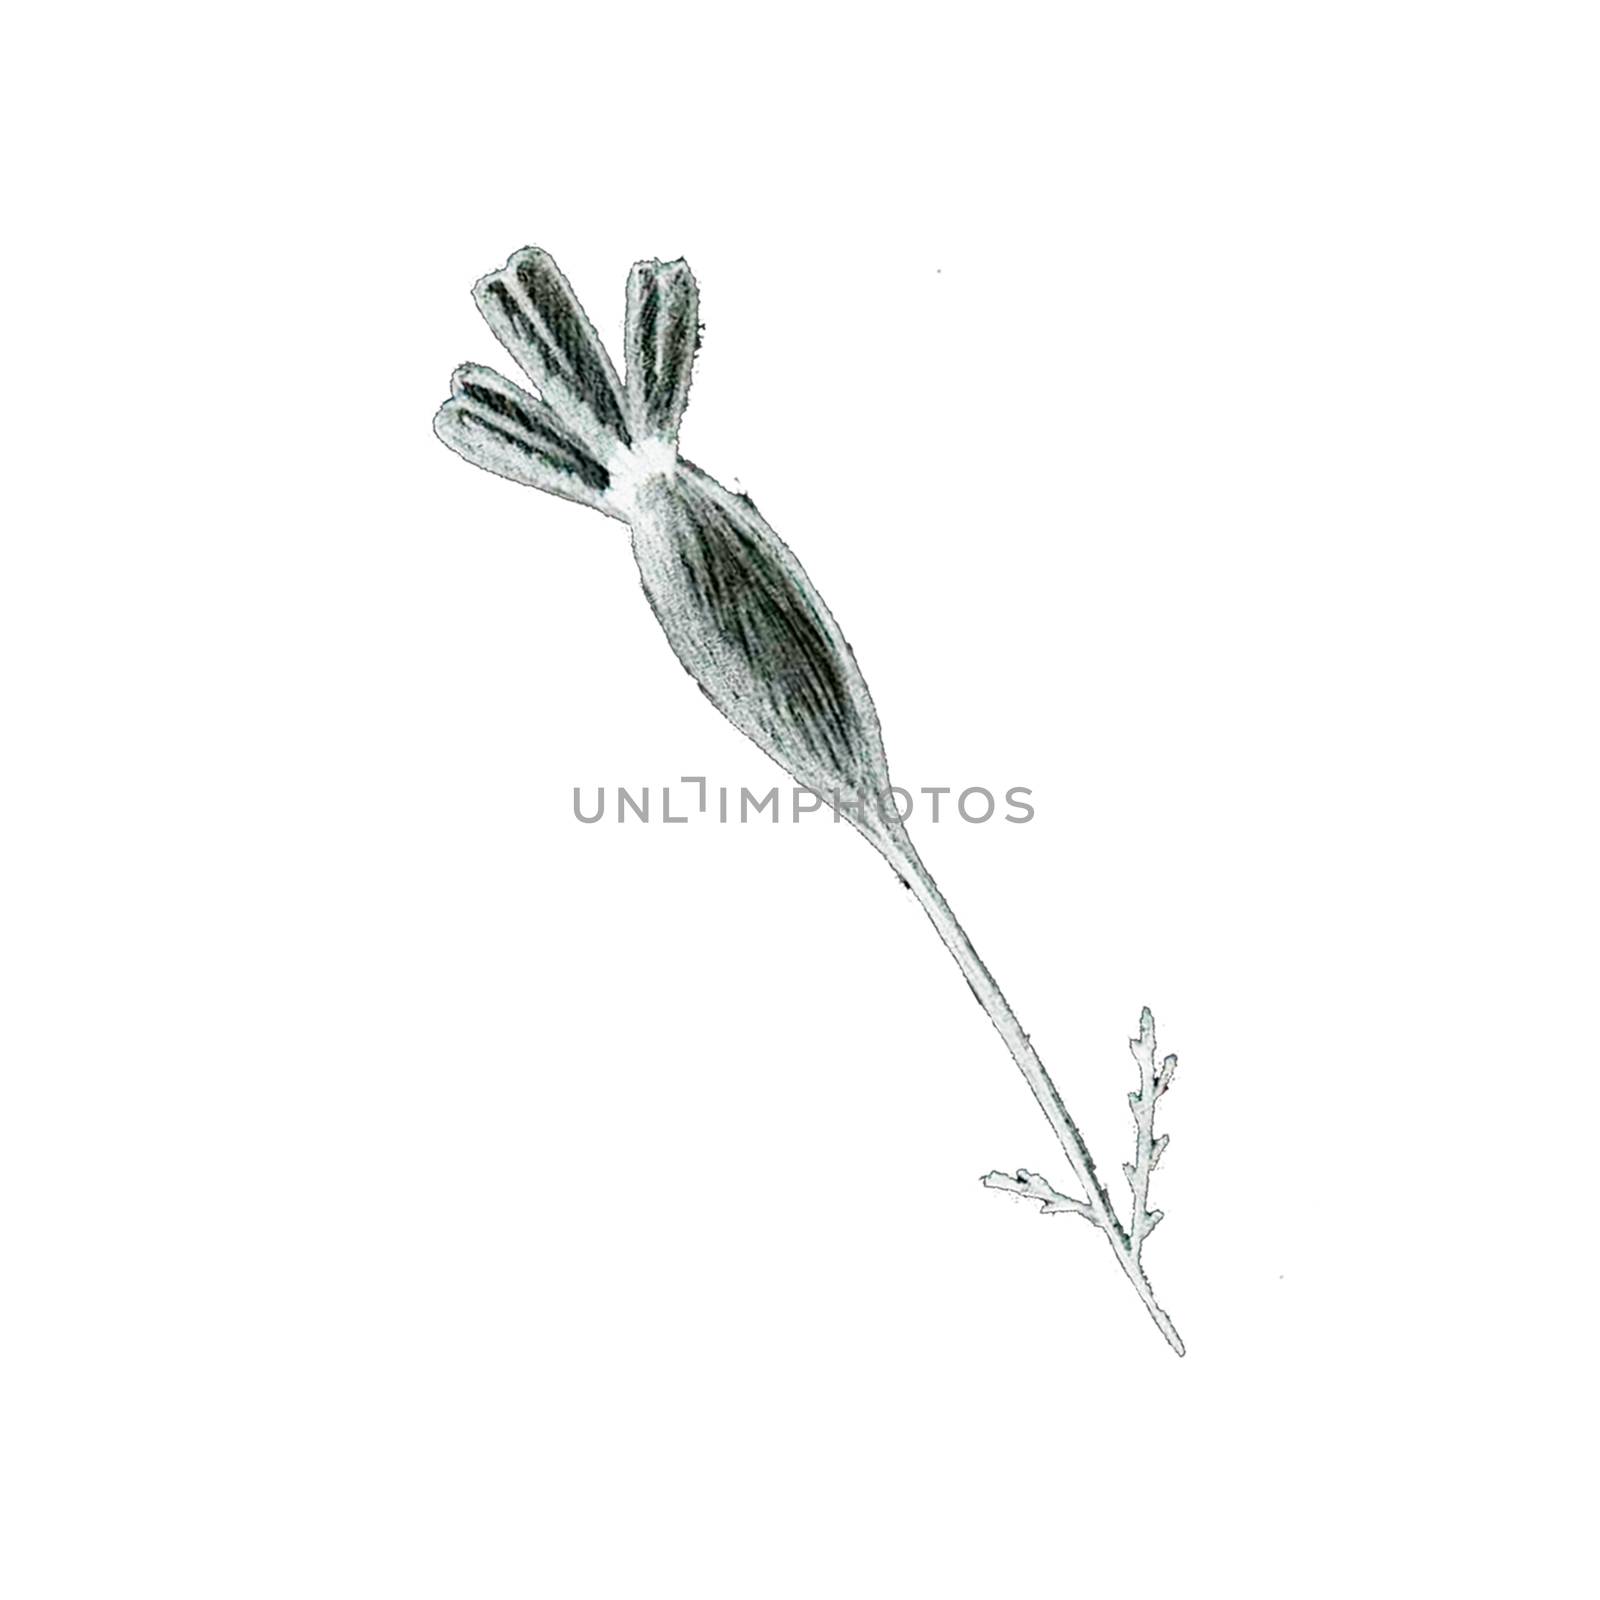 Black and White Hand-Drawn Flower. Thin-leaved Marigolds Sketch. by Rina_Dozornaya